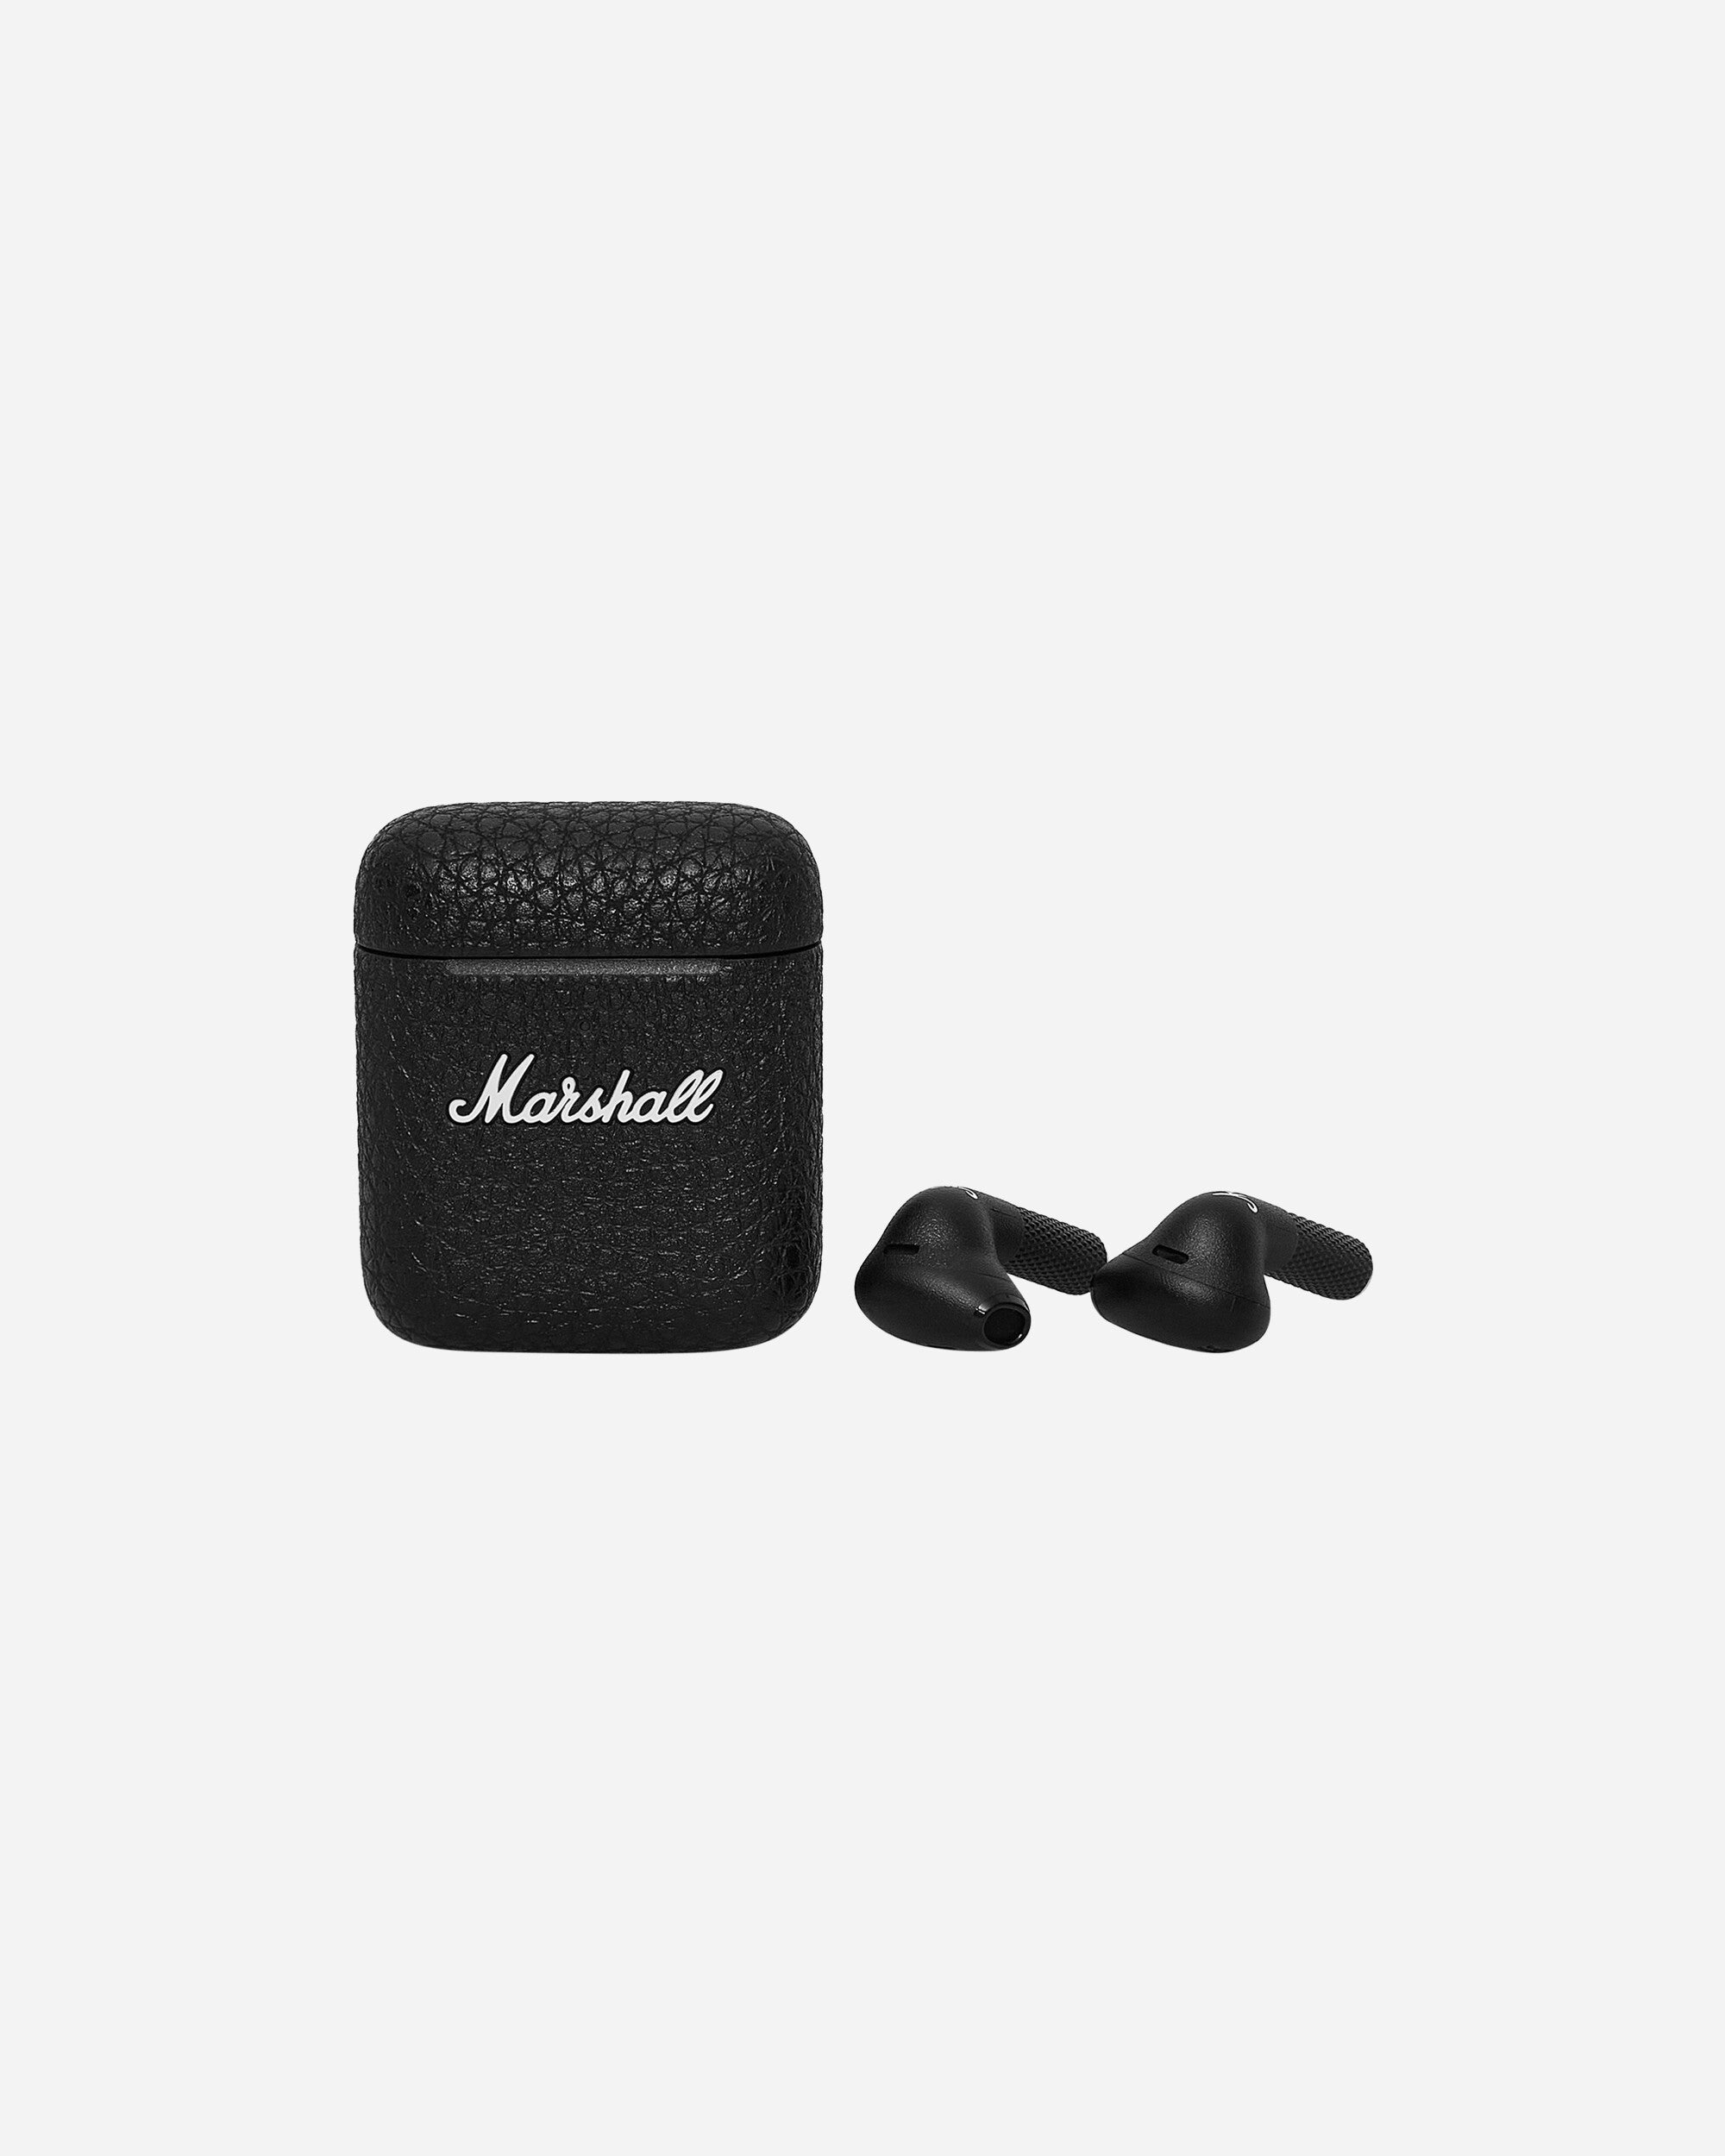 Marshall Minor IV Black Tech and Audio Earphones 1006653 BLACK